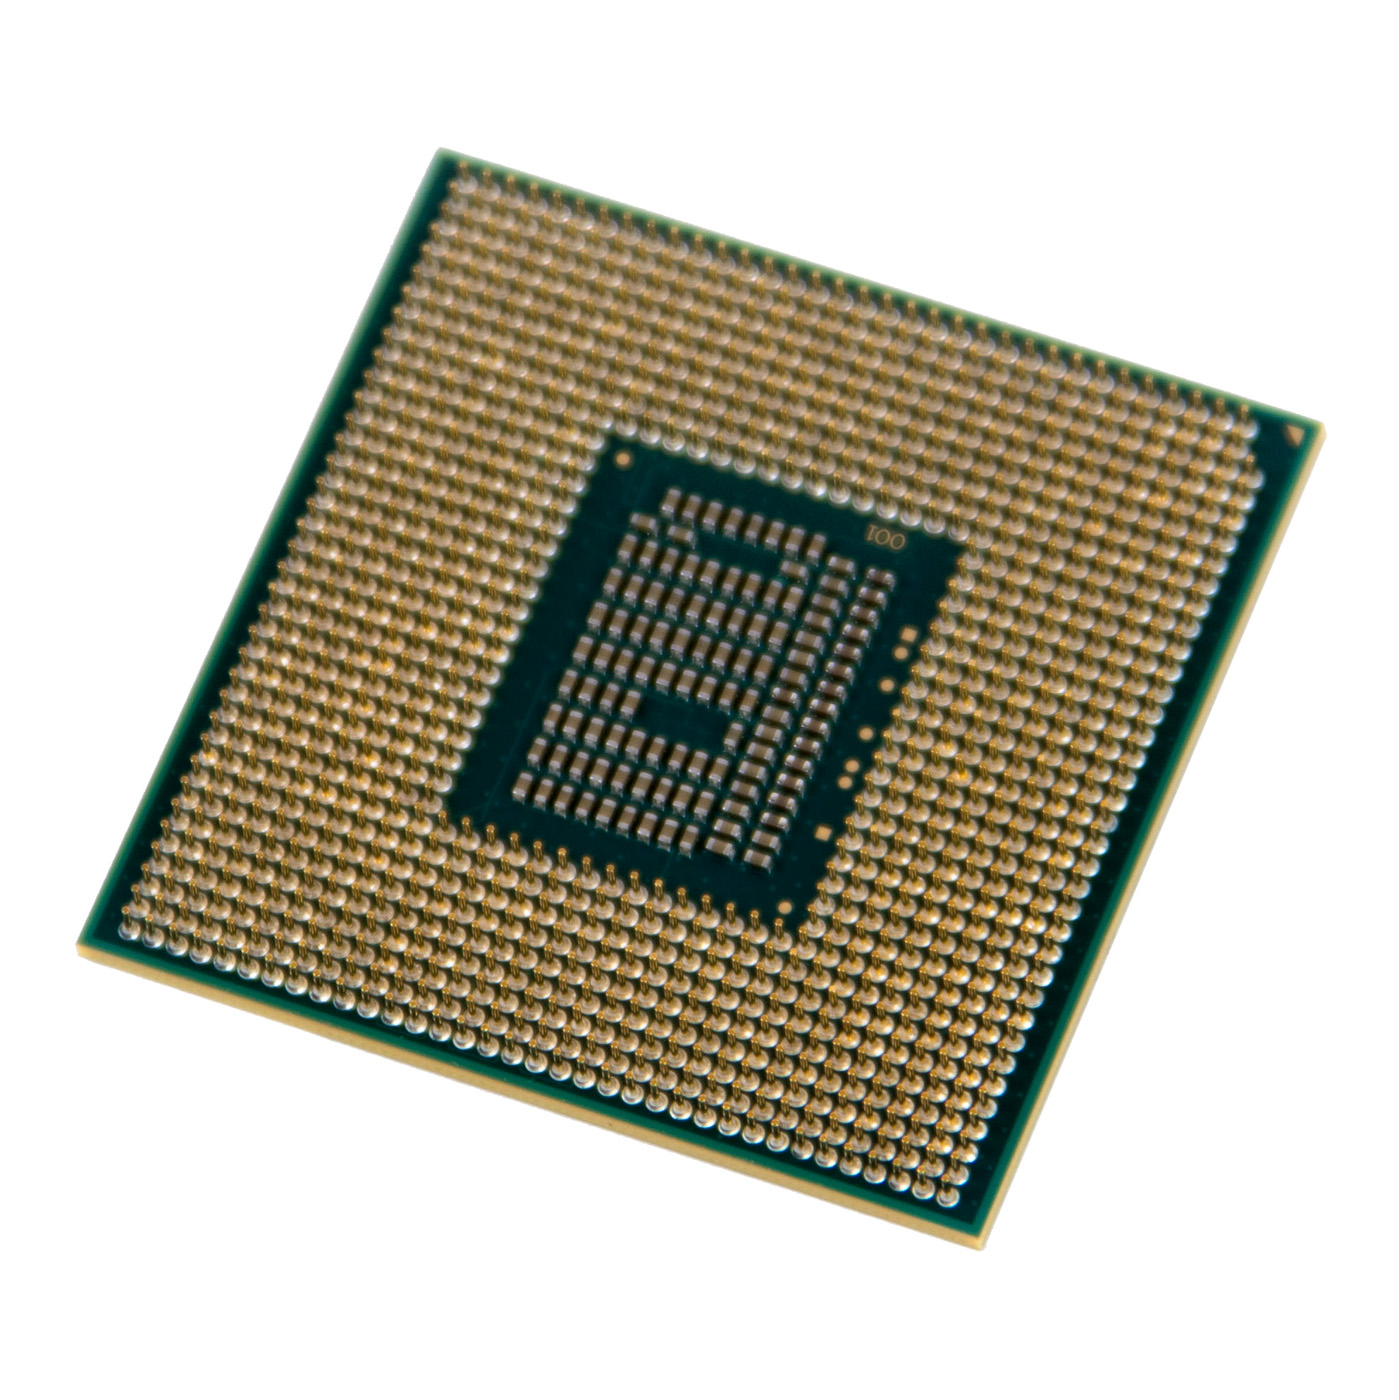 procesor-intel-core-i3-3120m-2x2-50-ghz-04w4440-abcdeal-pl